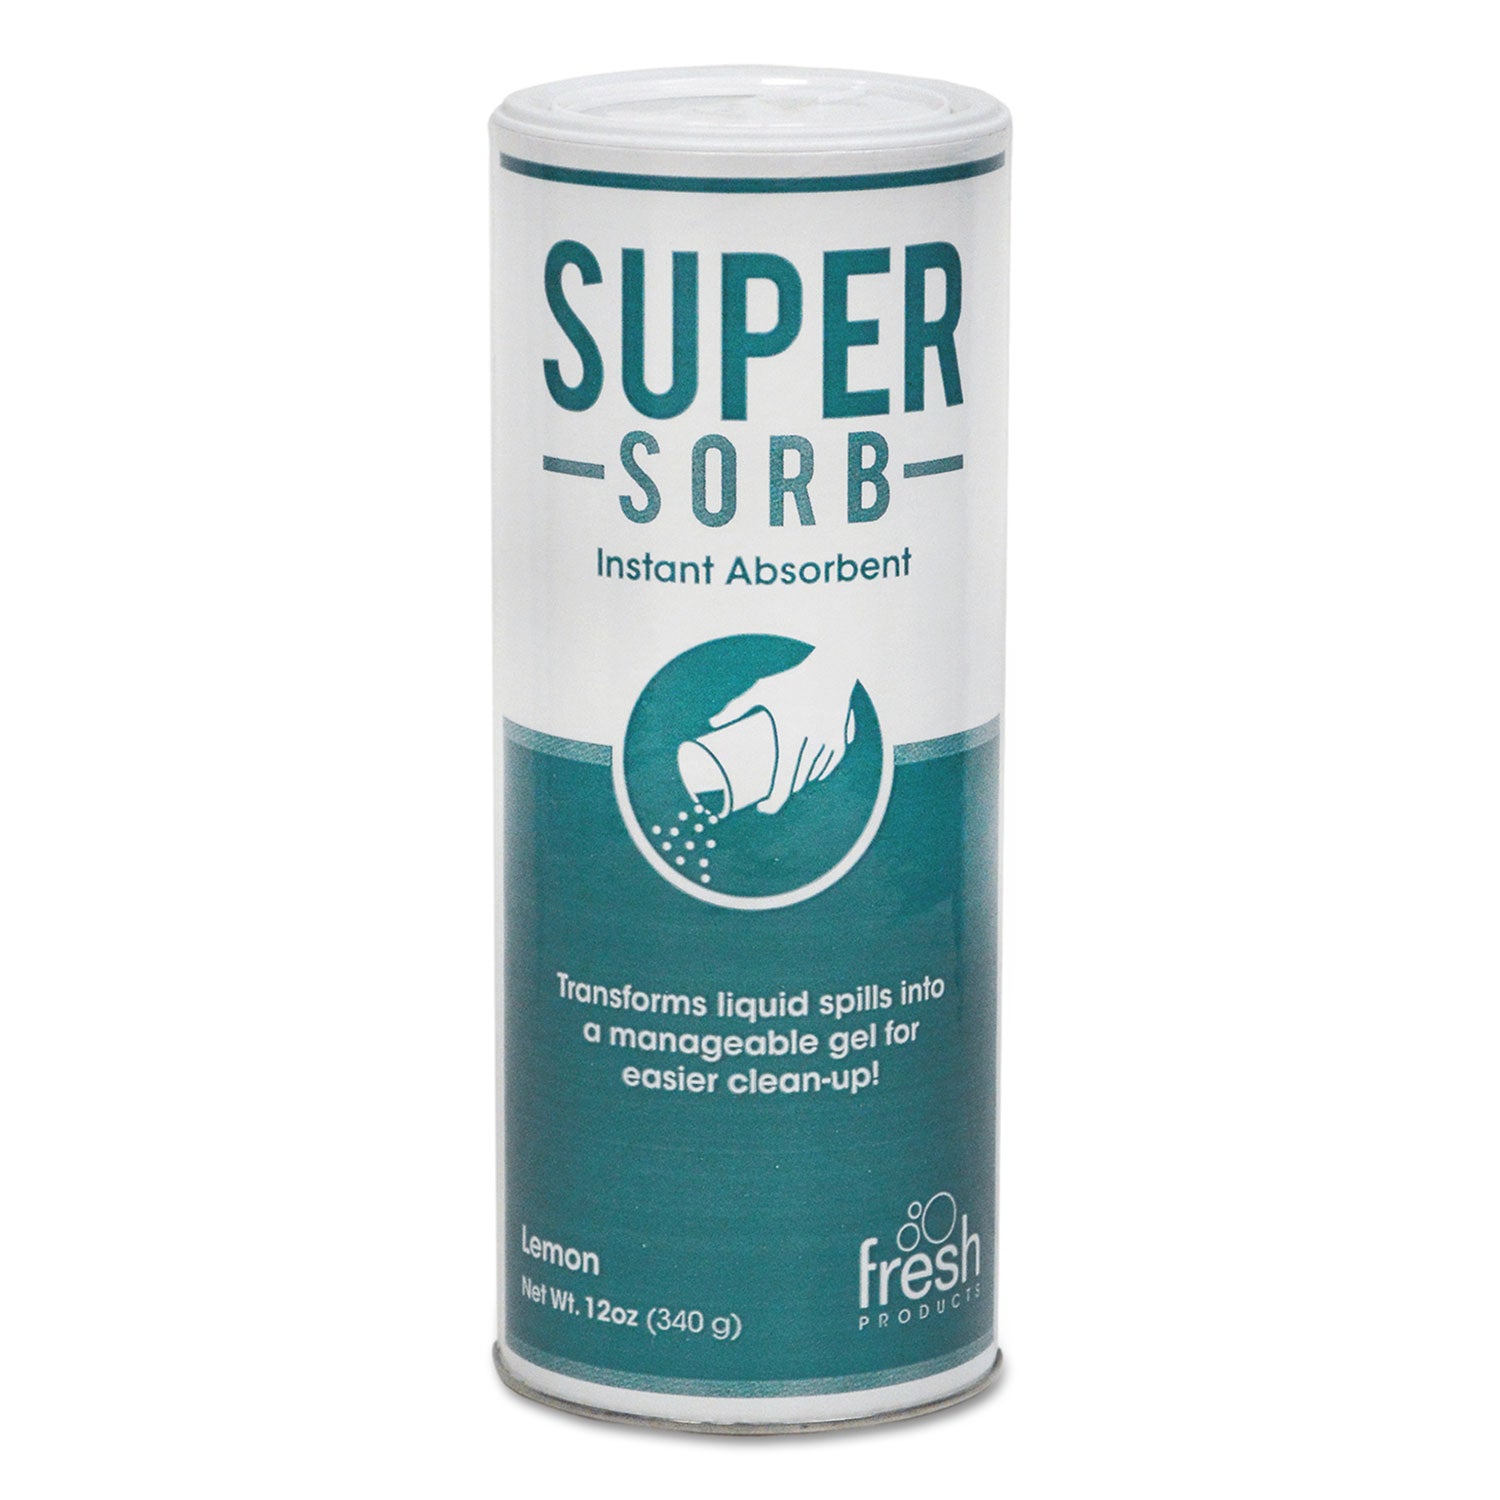 Super-Sorb Liquid Spill Absorbent, Lemon Scent, 720 oz Absorbing Volume, 12 oz Shaker Can - 